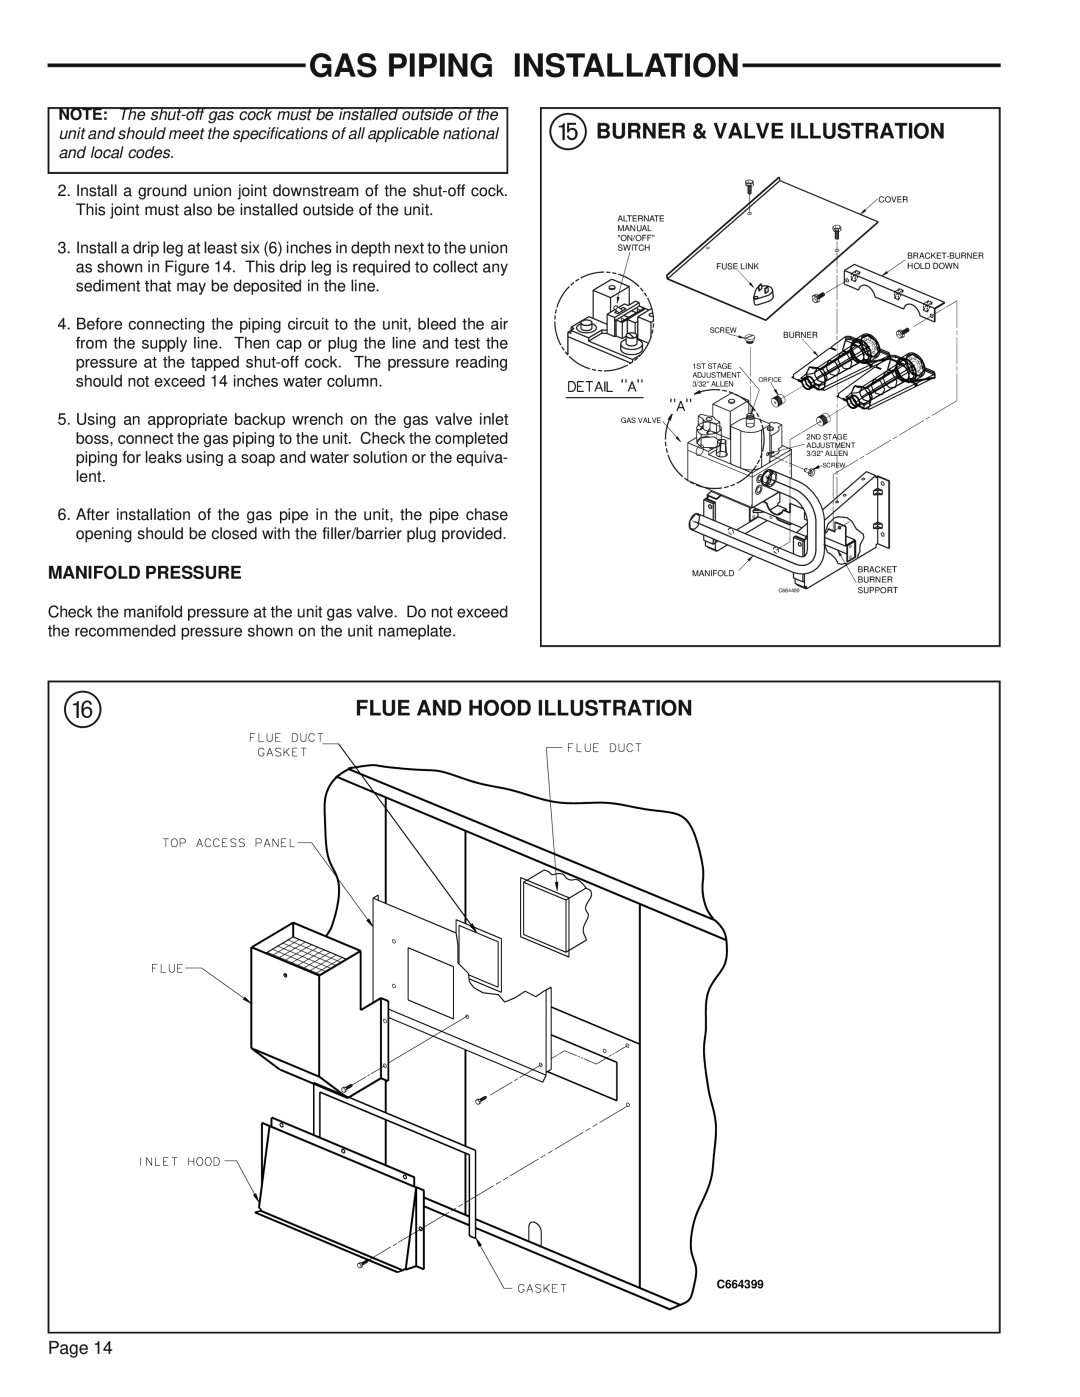 Trane YCZ035F1 manual t BURNER & VALVE ILLUSTRATION, Flue And Hood Illustration, Gas Piping Installation, Manifold Pressure 